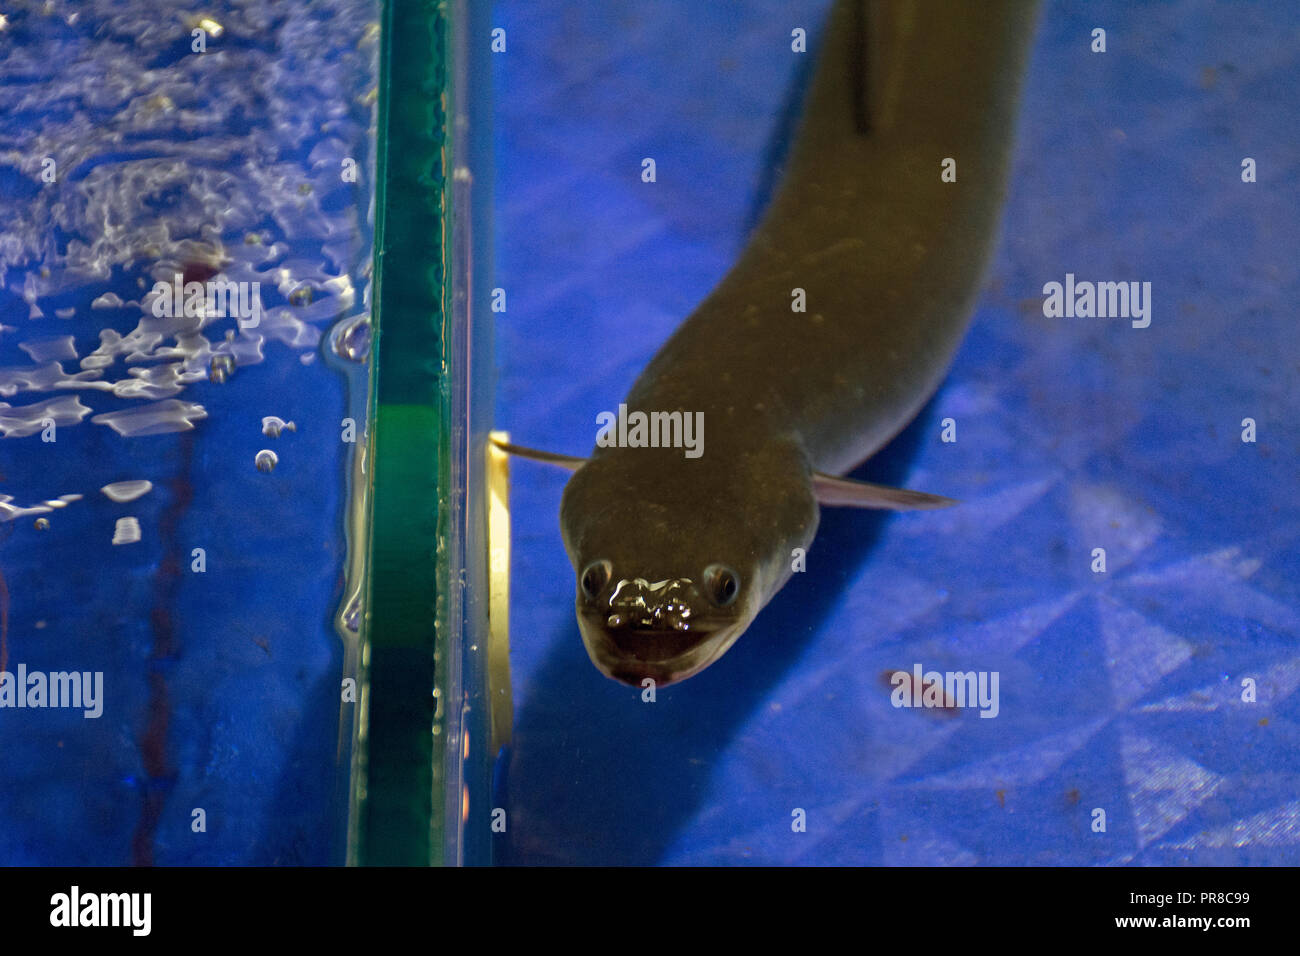 Moray eel on display at the seafood market in Haikou, Hainan Island, China Stock Photo